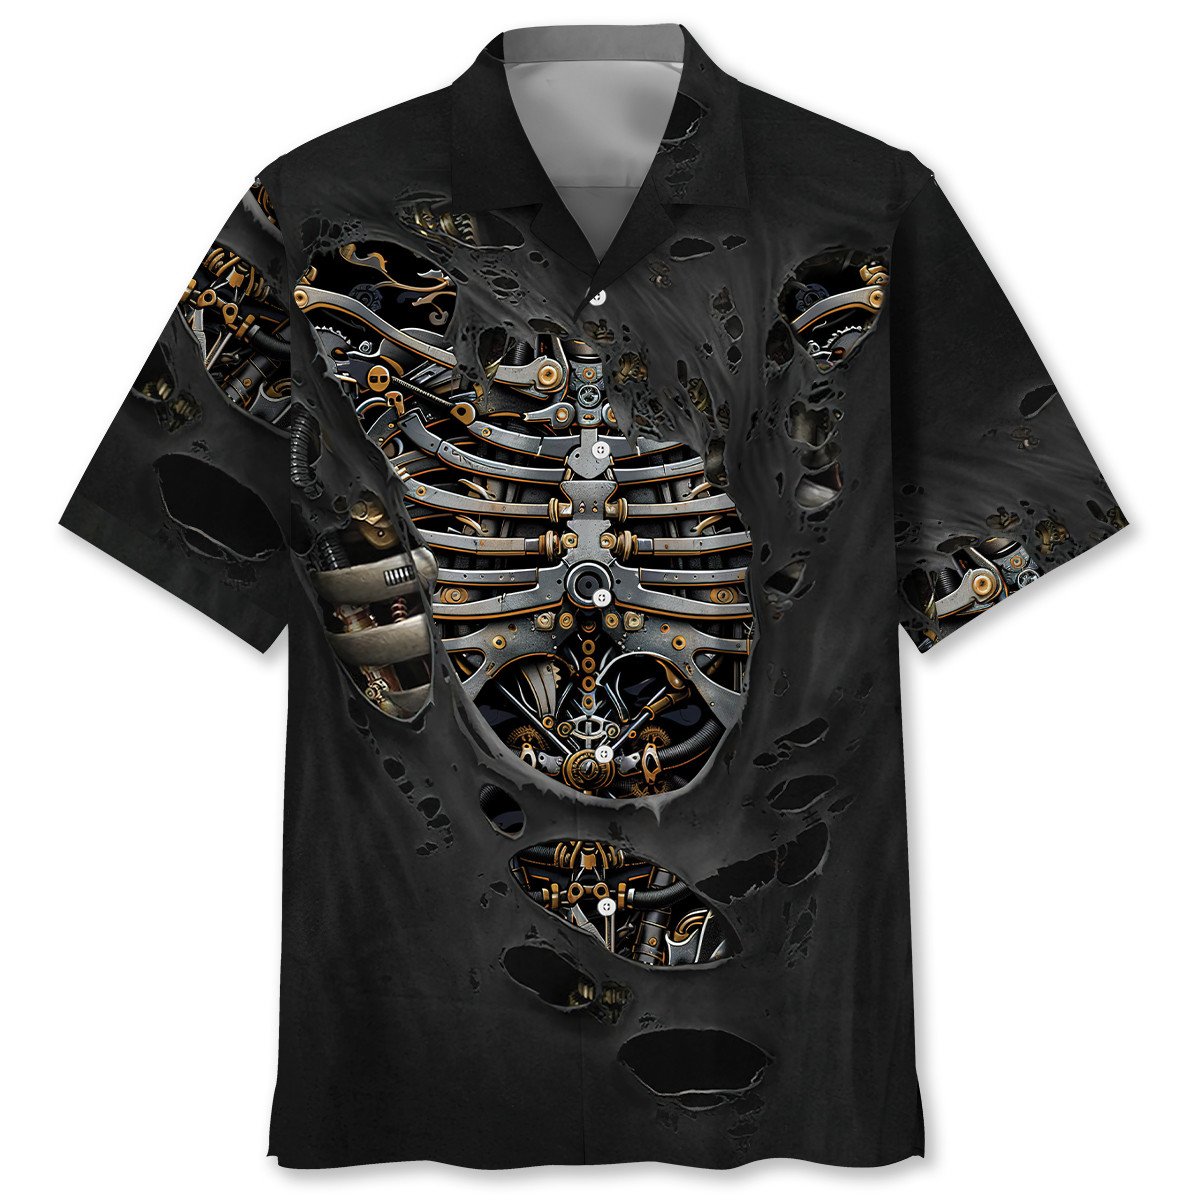 Mechanic From Bones Hawaiian Shirt